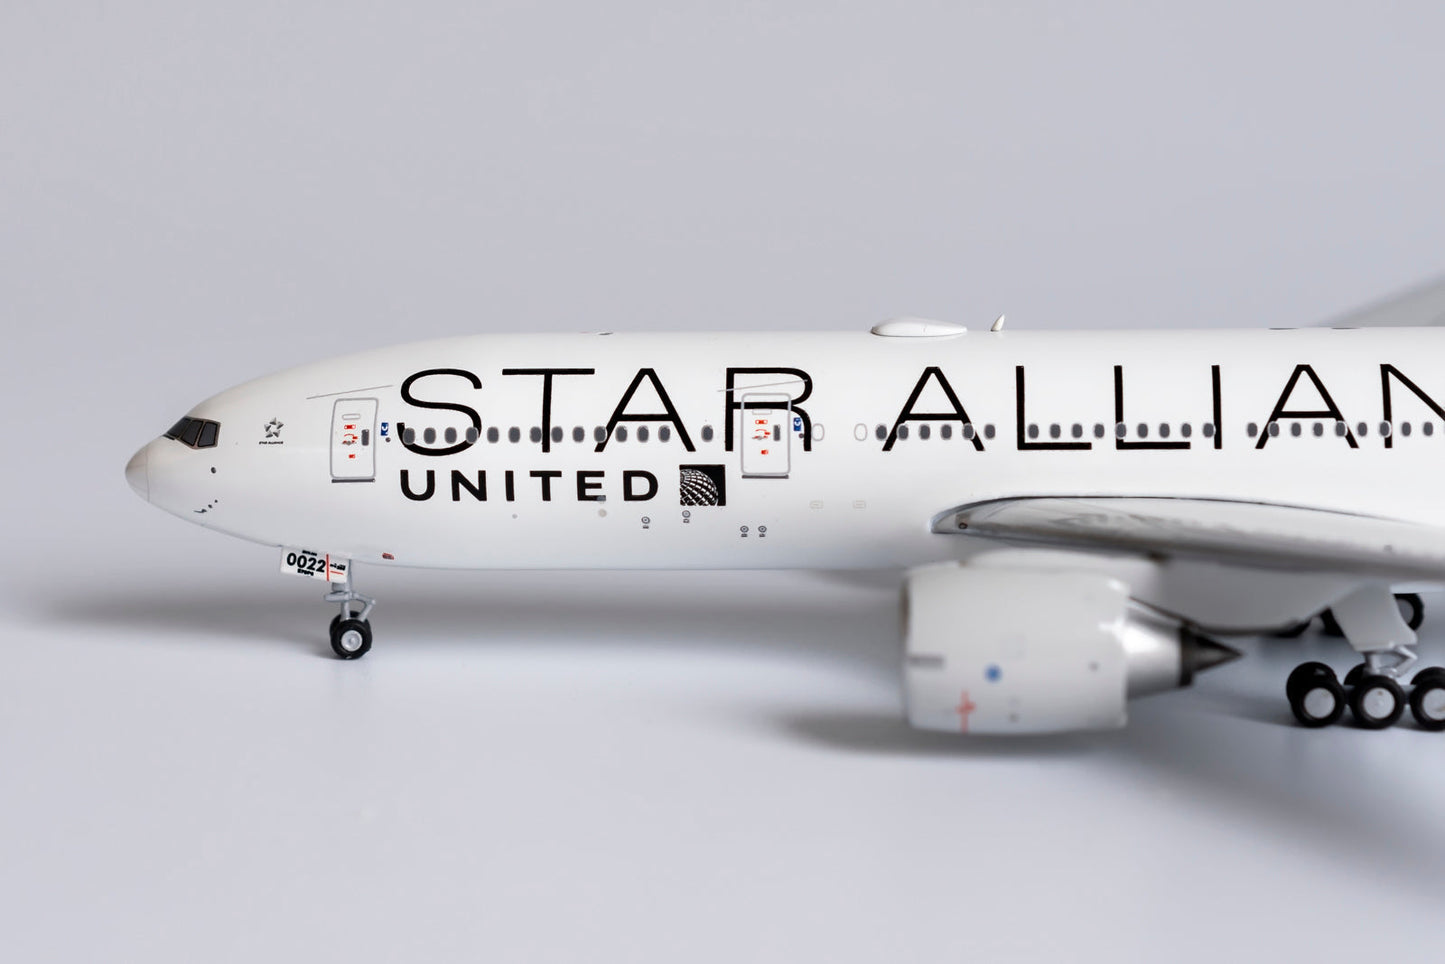 1/400 United Airlines B 777-200ER "Star Alliance Livery" NG Models 72001s/d2  *Defective model*